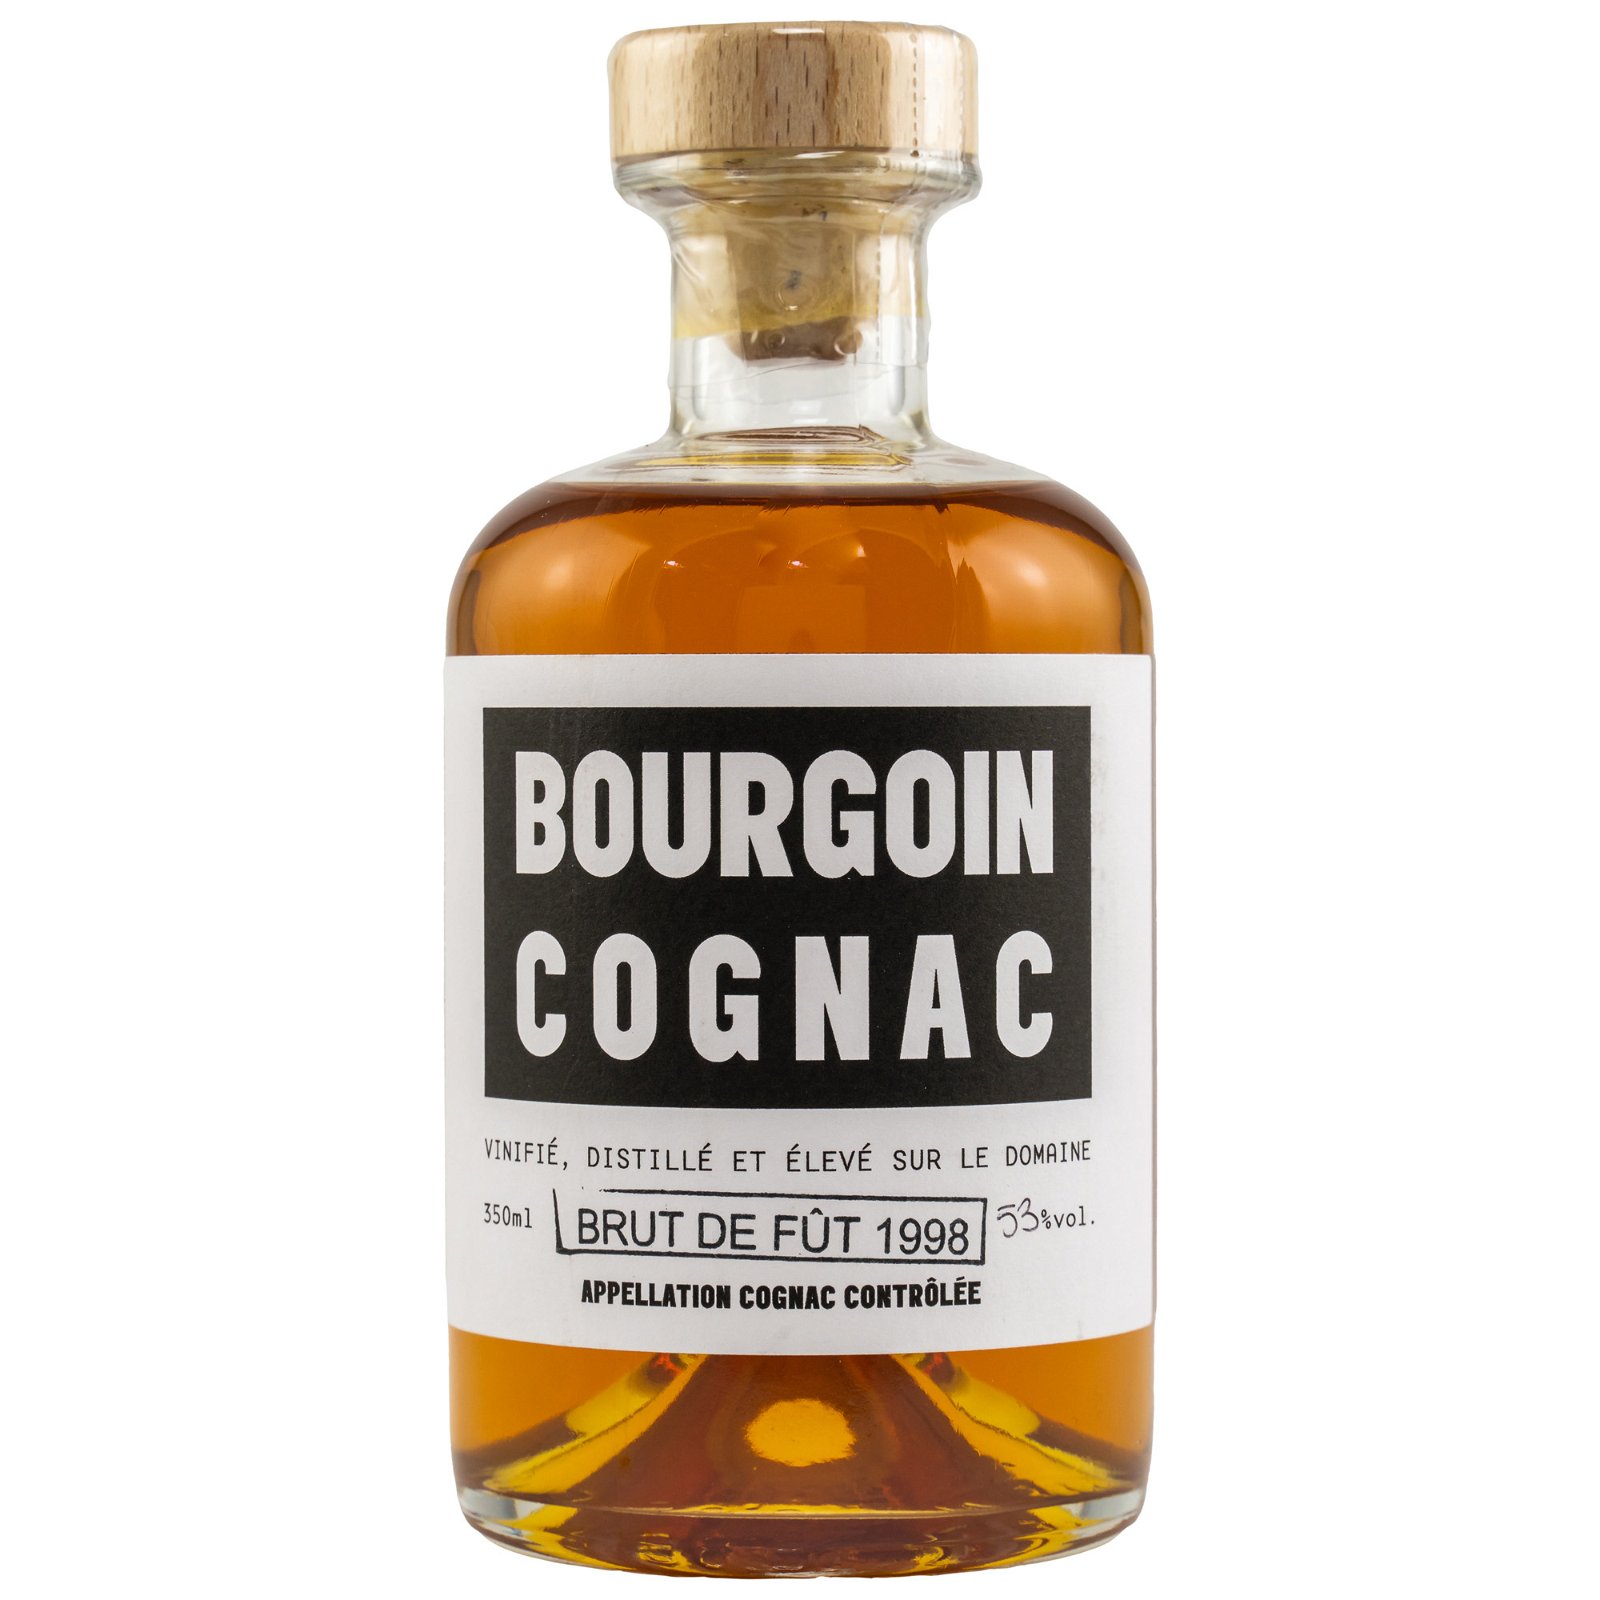 Bourgoin Cognac Brut de Fut 1998 Gold (350ml)